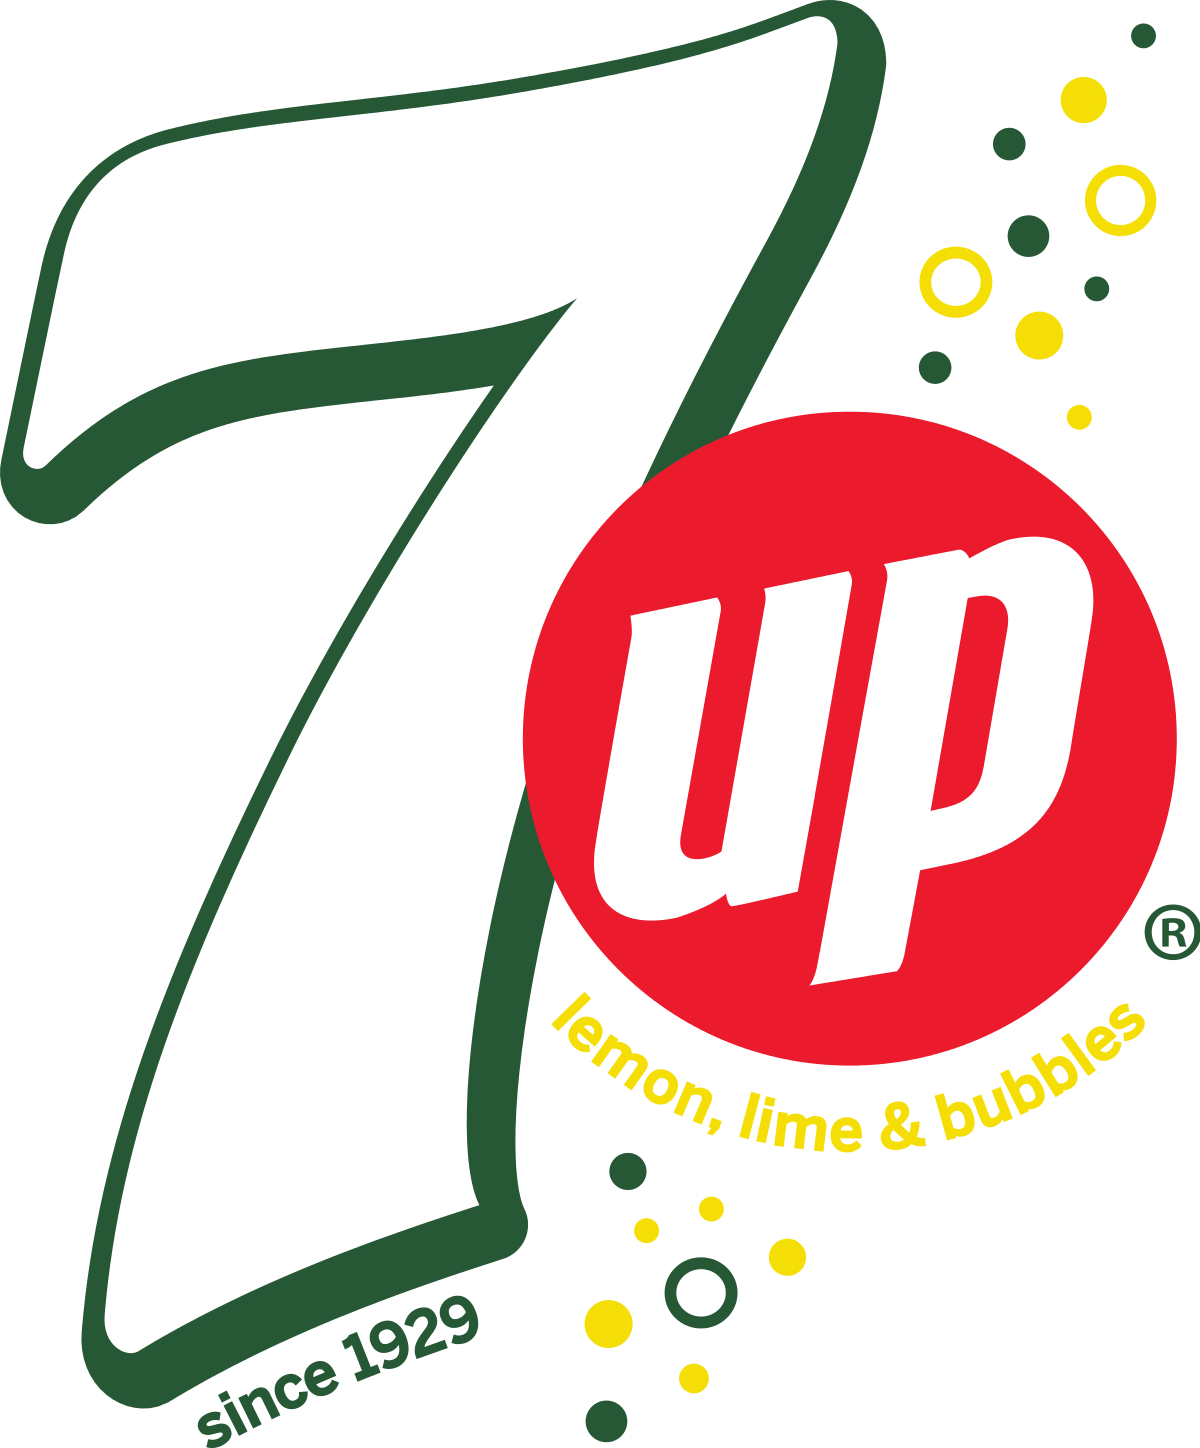 PepsiCo Global Logo - 7 Up